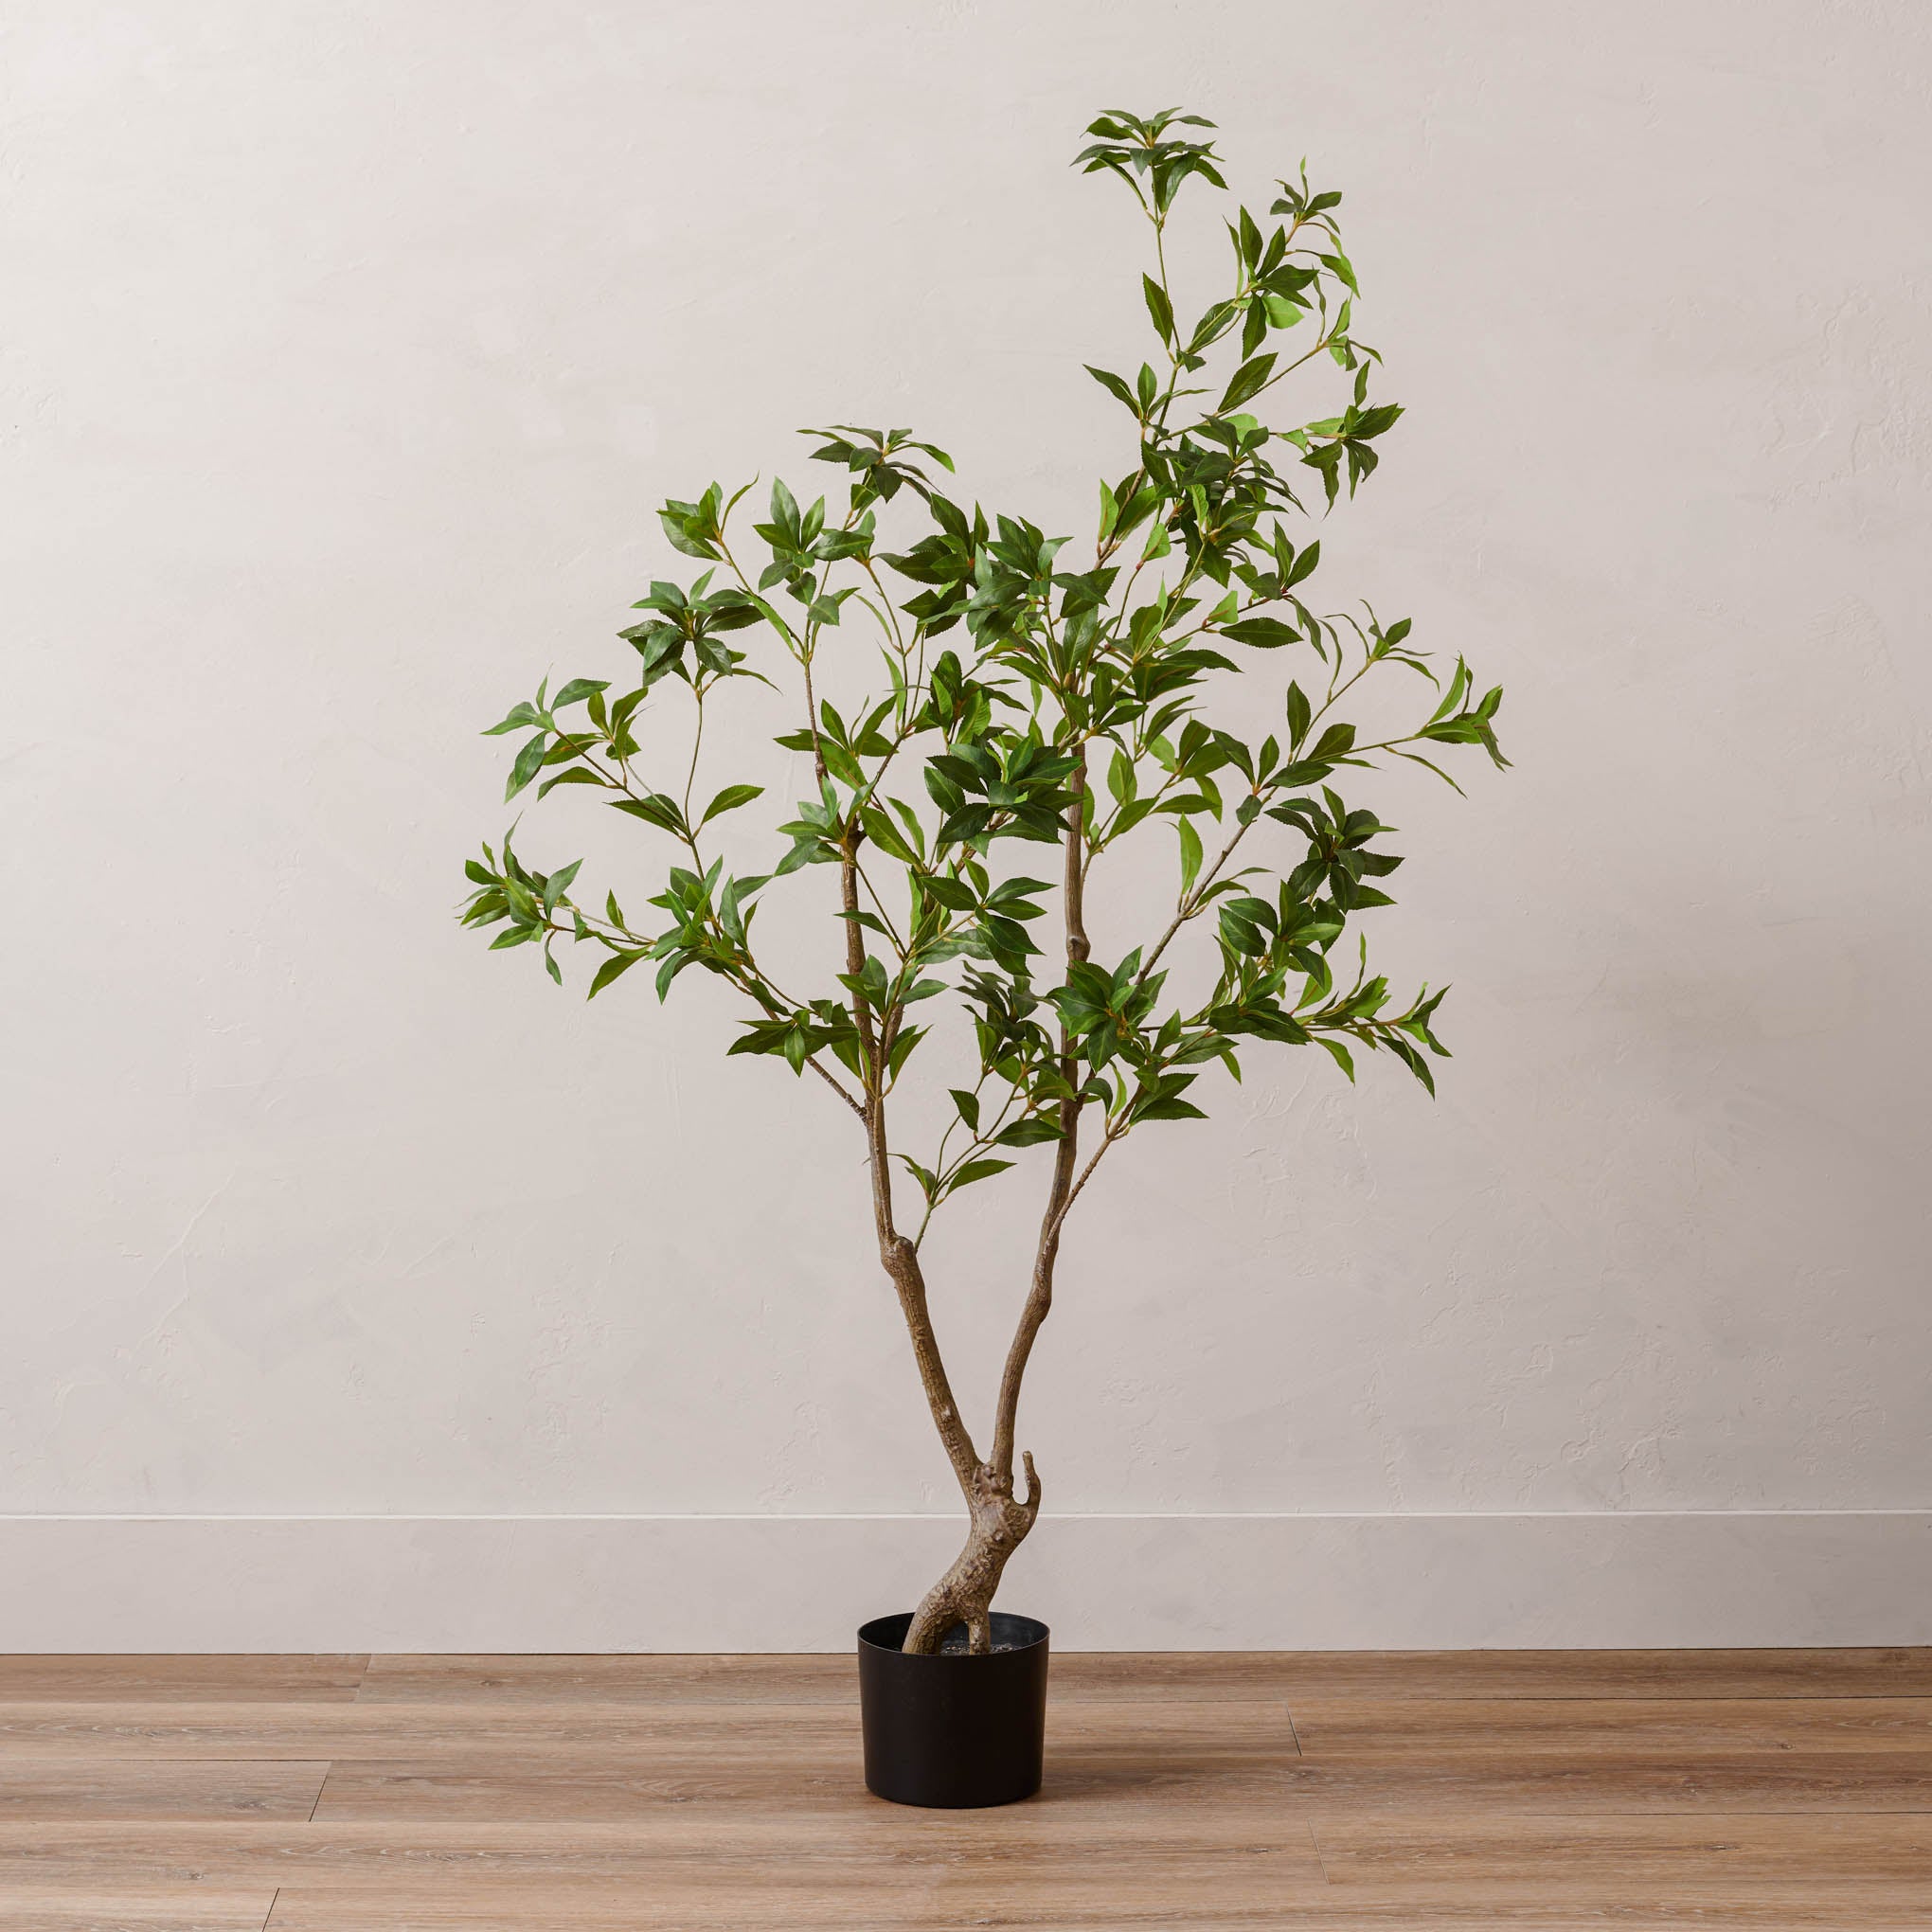 62" Pieris Japonica Tree in Plastic Pot $175.00